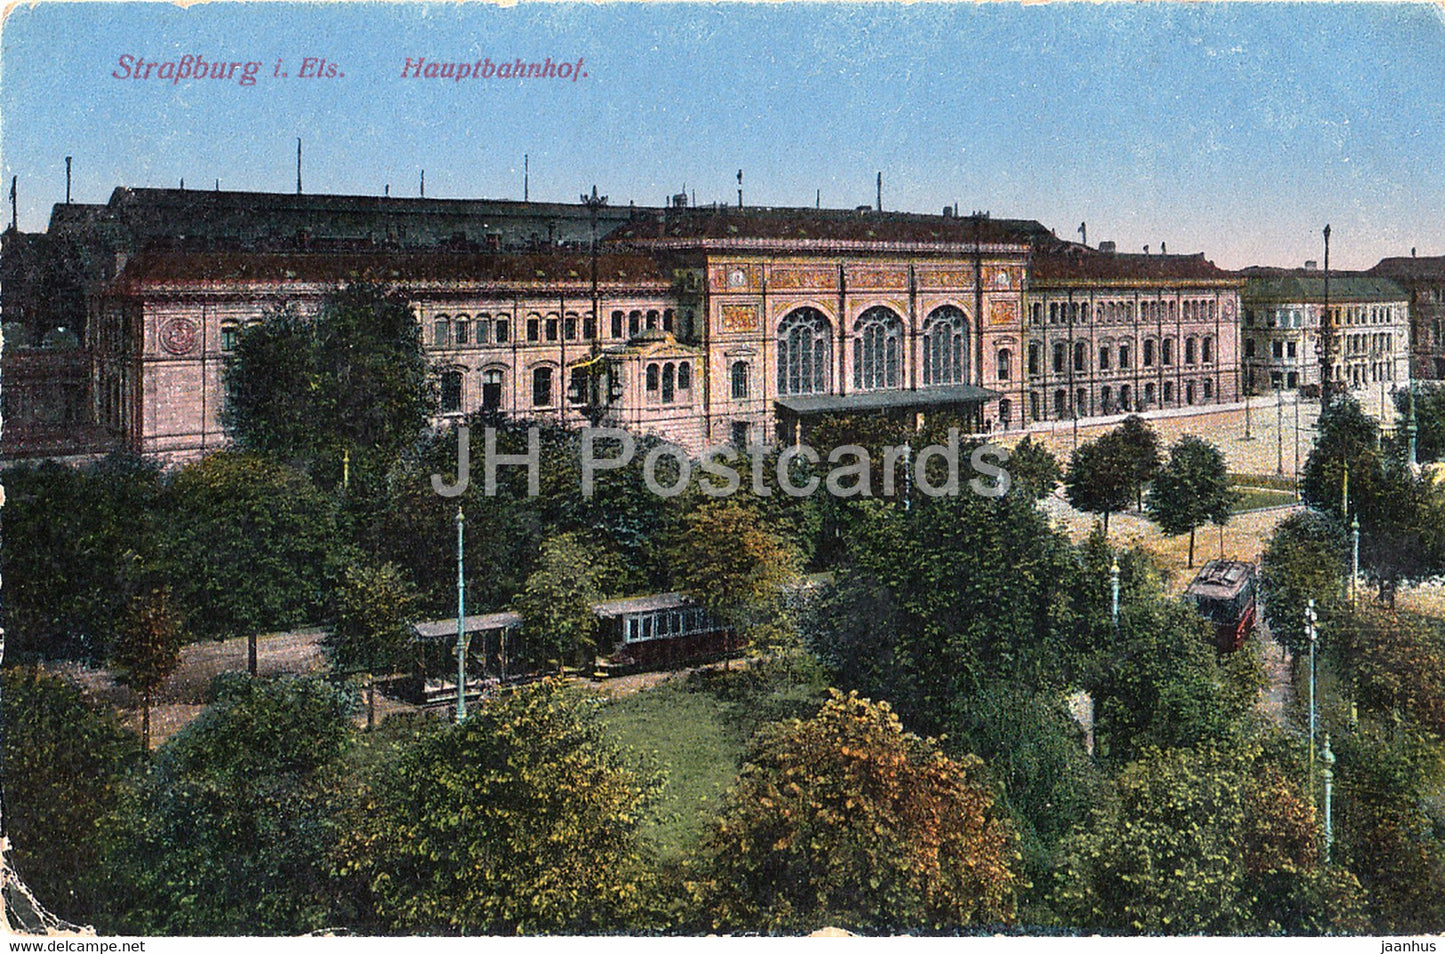 Strassburg i Els - Strasbourg - Hauptbahnhof - railway station - Feldpost - 23213 - old postcard - 1918 - France - used - JH Postcards